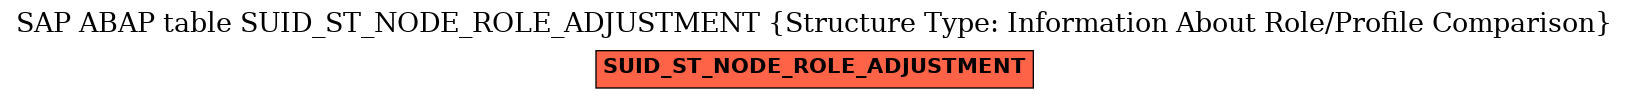 E-R Diagram for table SUID_ST_NODE_ROLE_ADJUSTMENT (Structure Type: Information About Role/Profile Comparison)